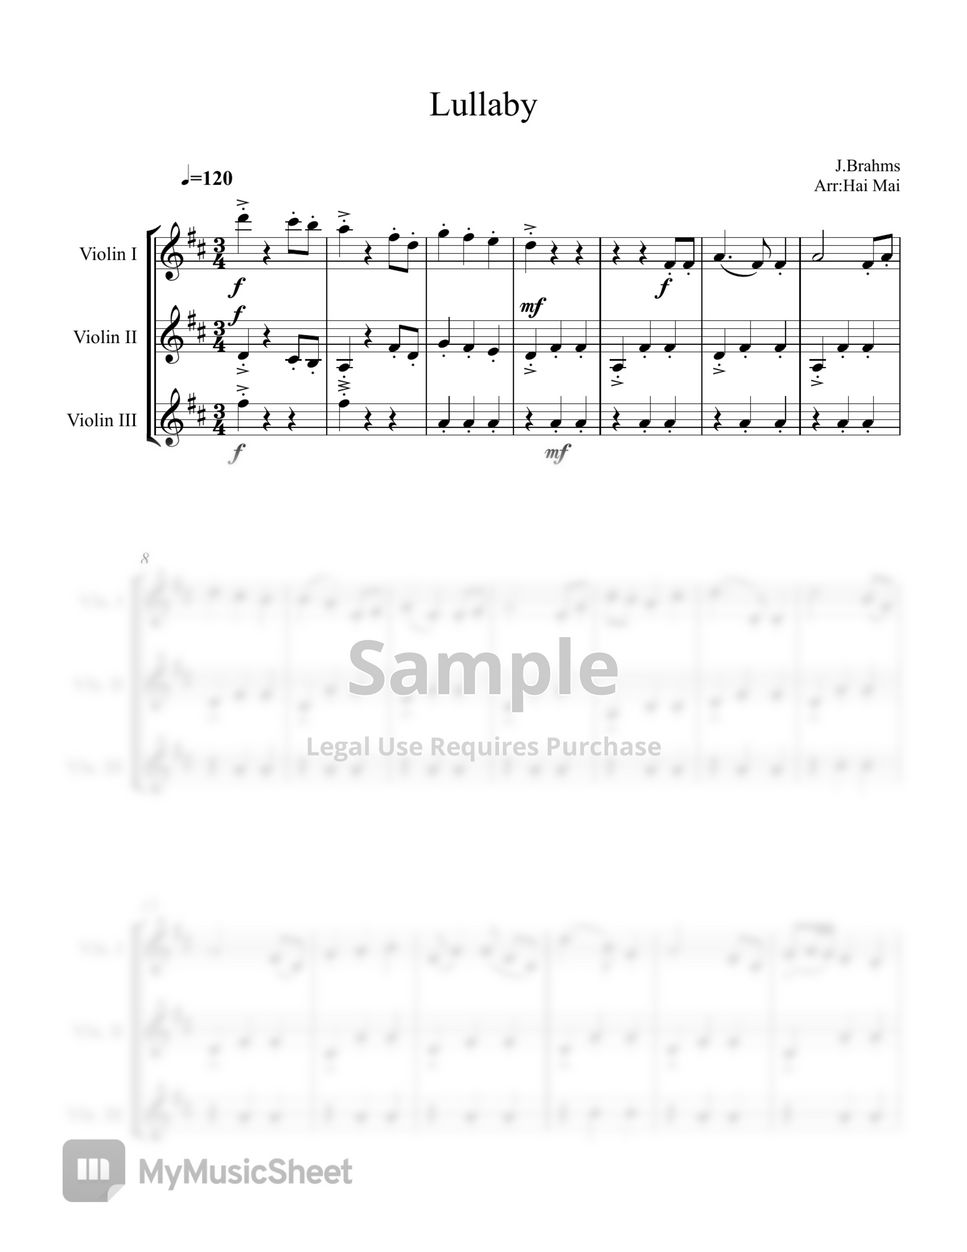 Johannes Brahms - Lullaby - for 3 parts Violin ensemble by Hai Mai